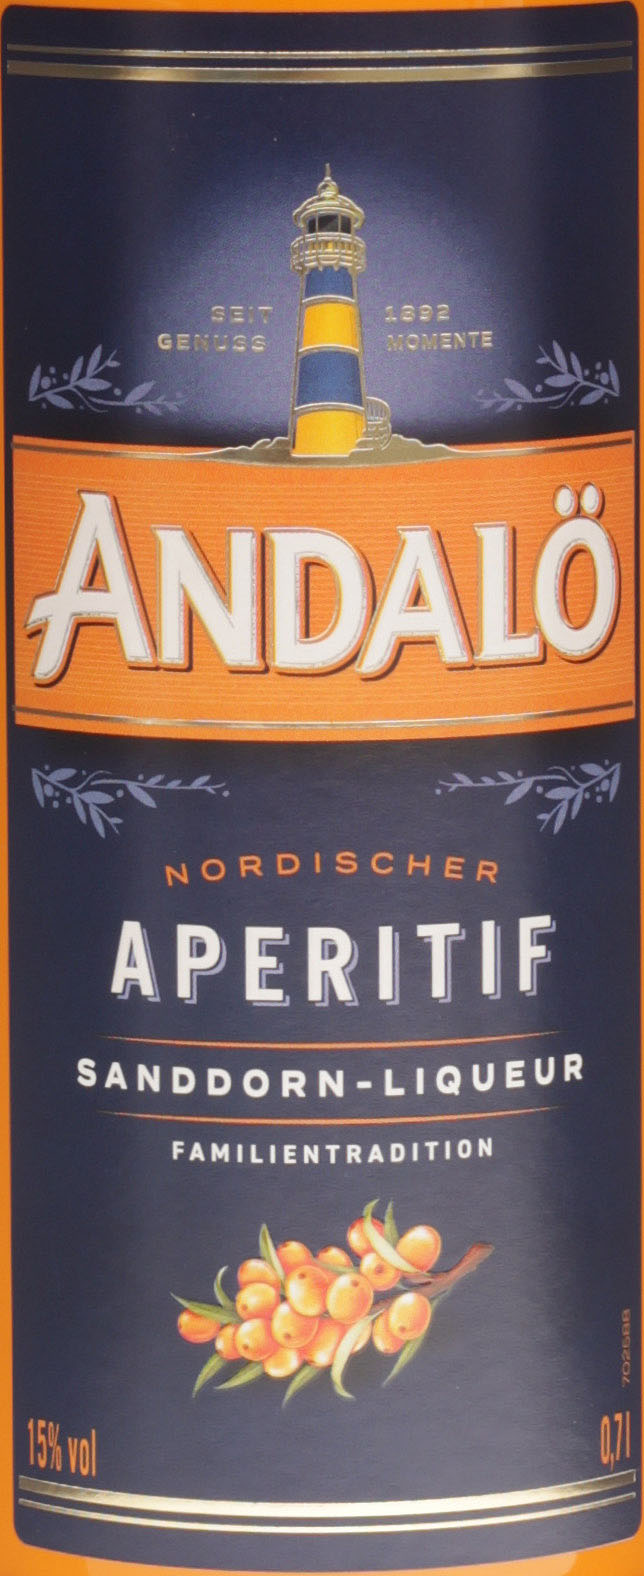 Andalö Original Sanddorn Likör hier bei uns im Shop 